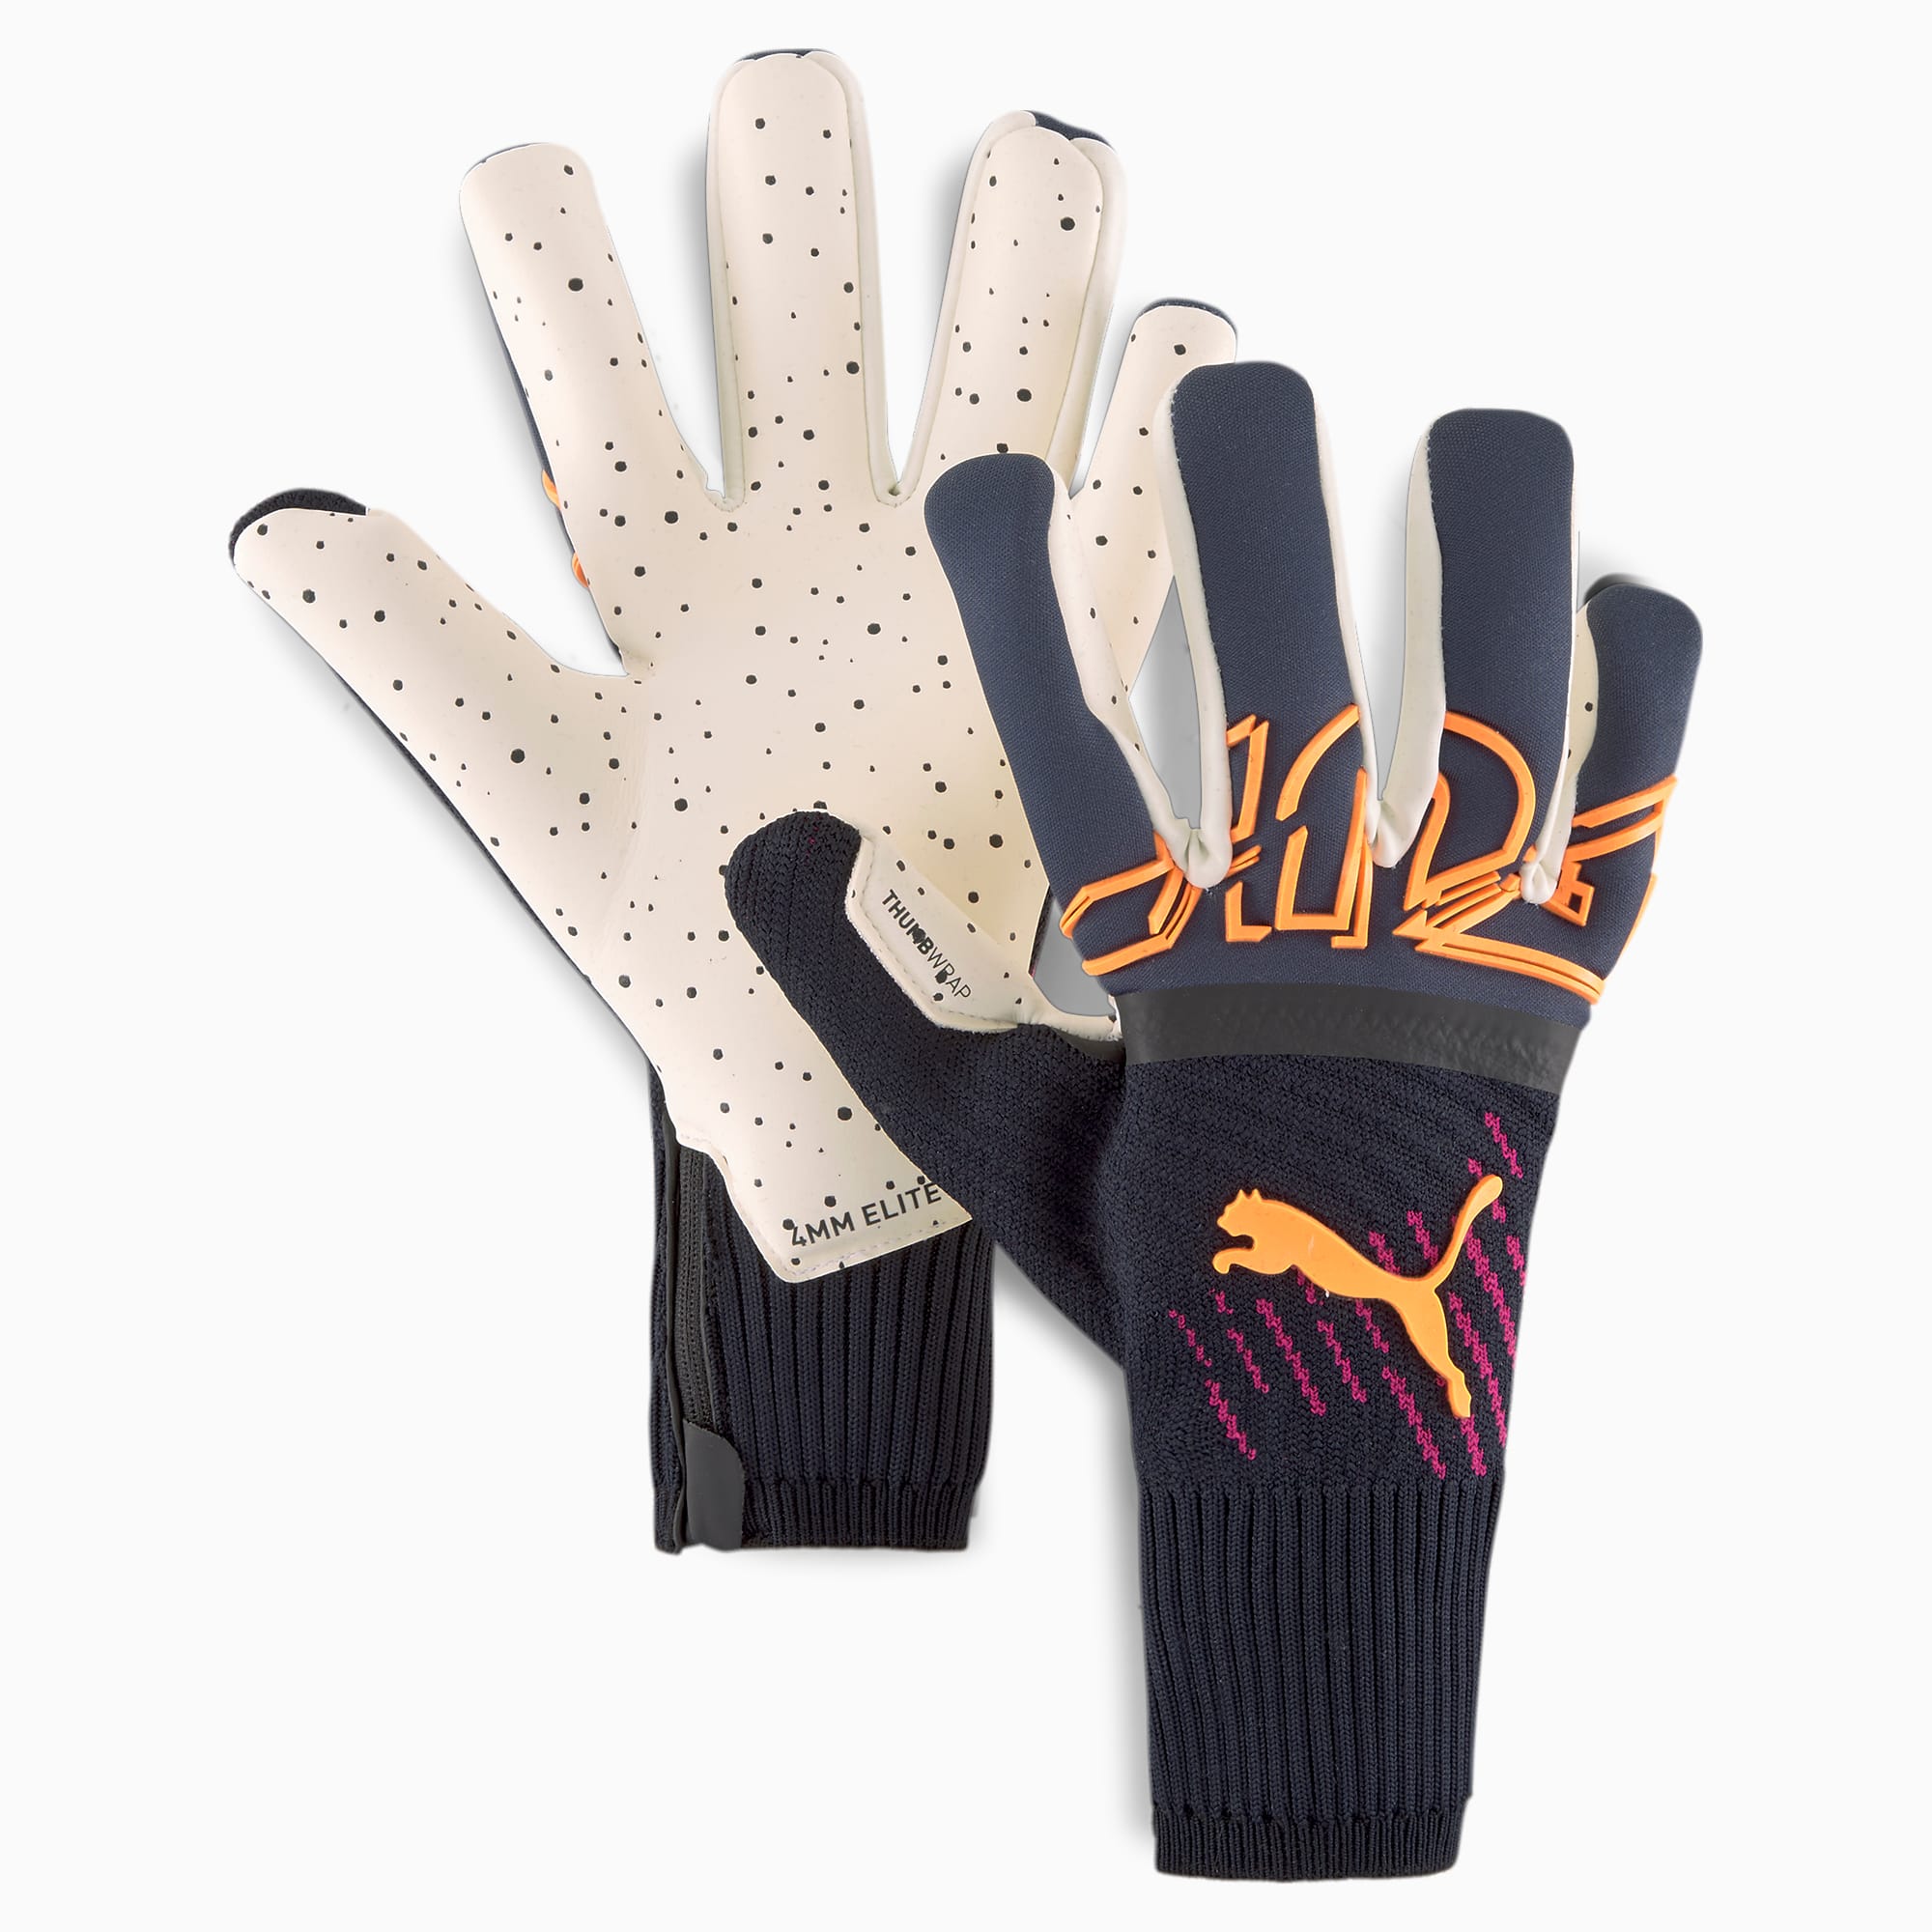 FUTURE Grip 1 Goalkeeper Gloves | orange |